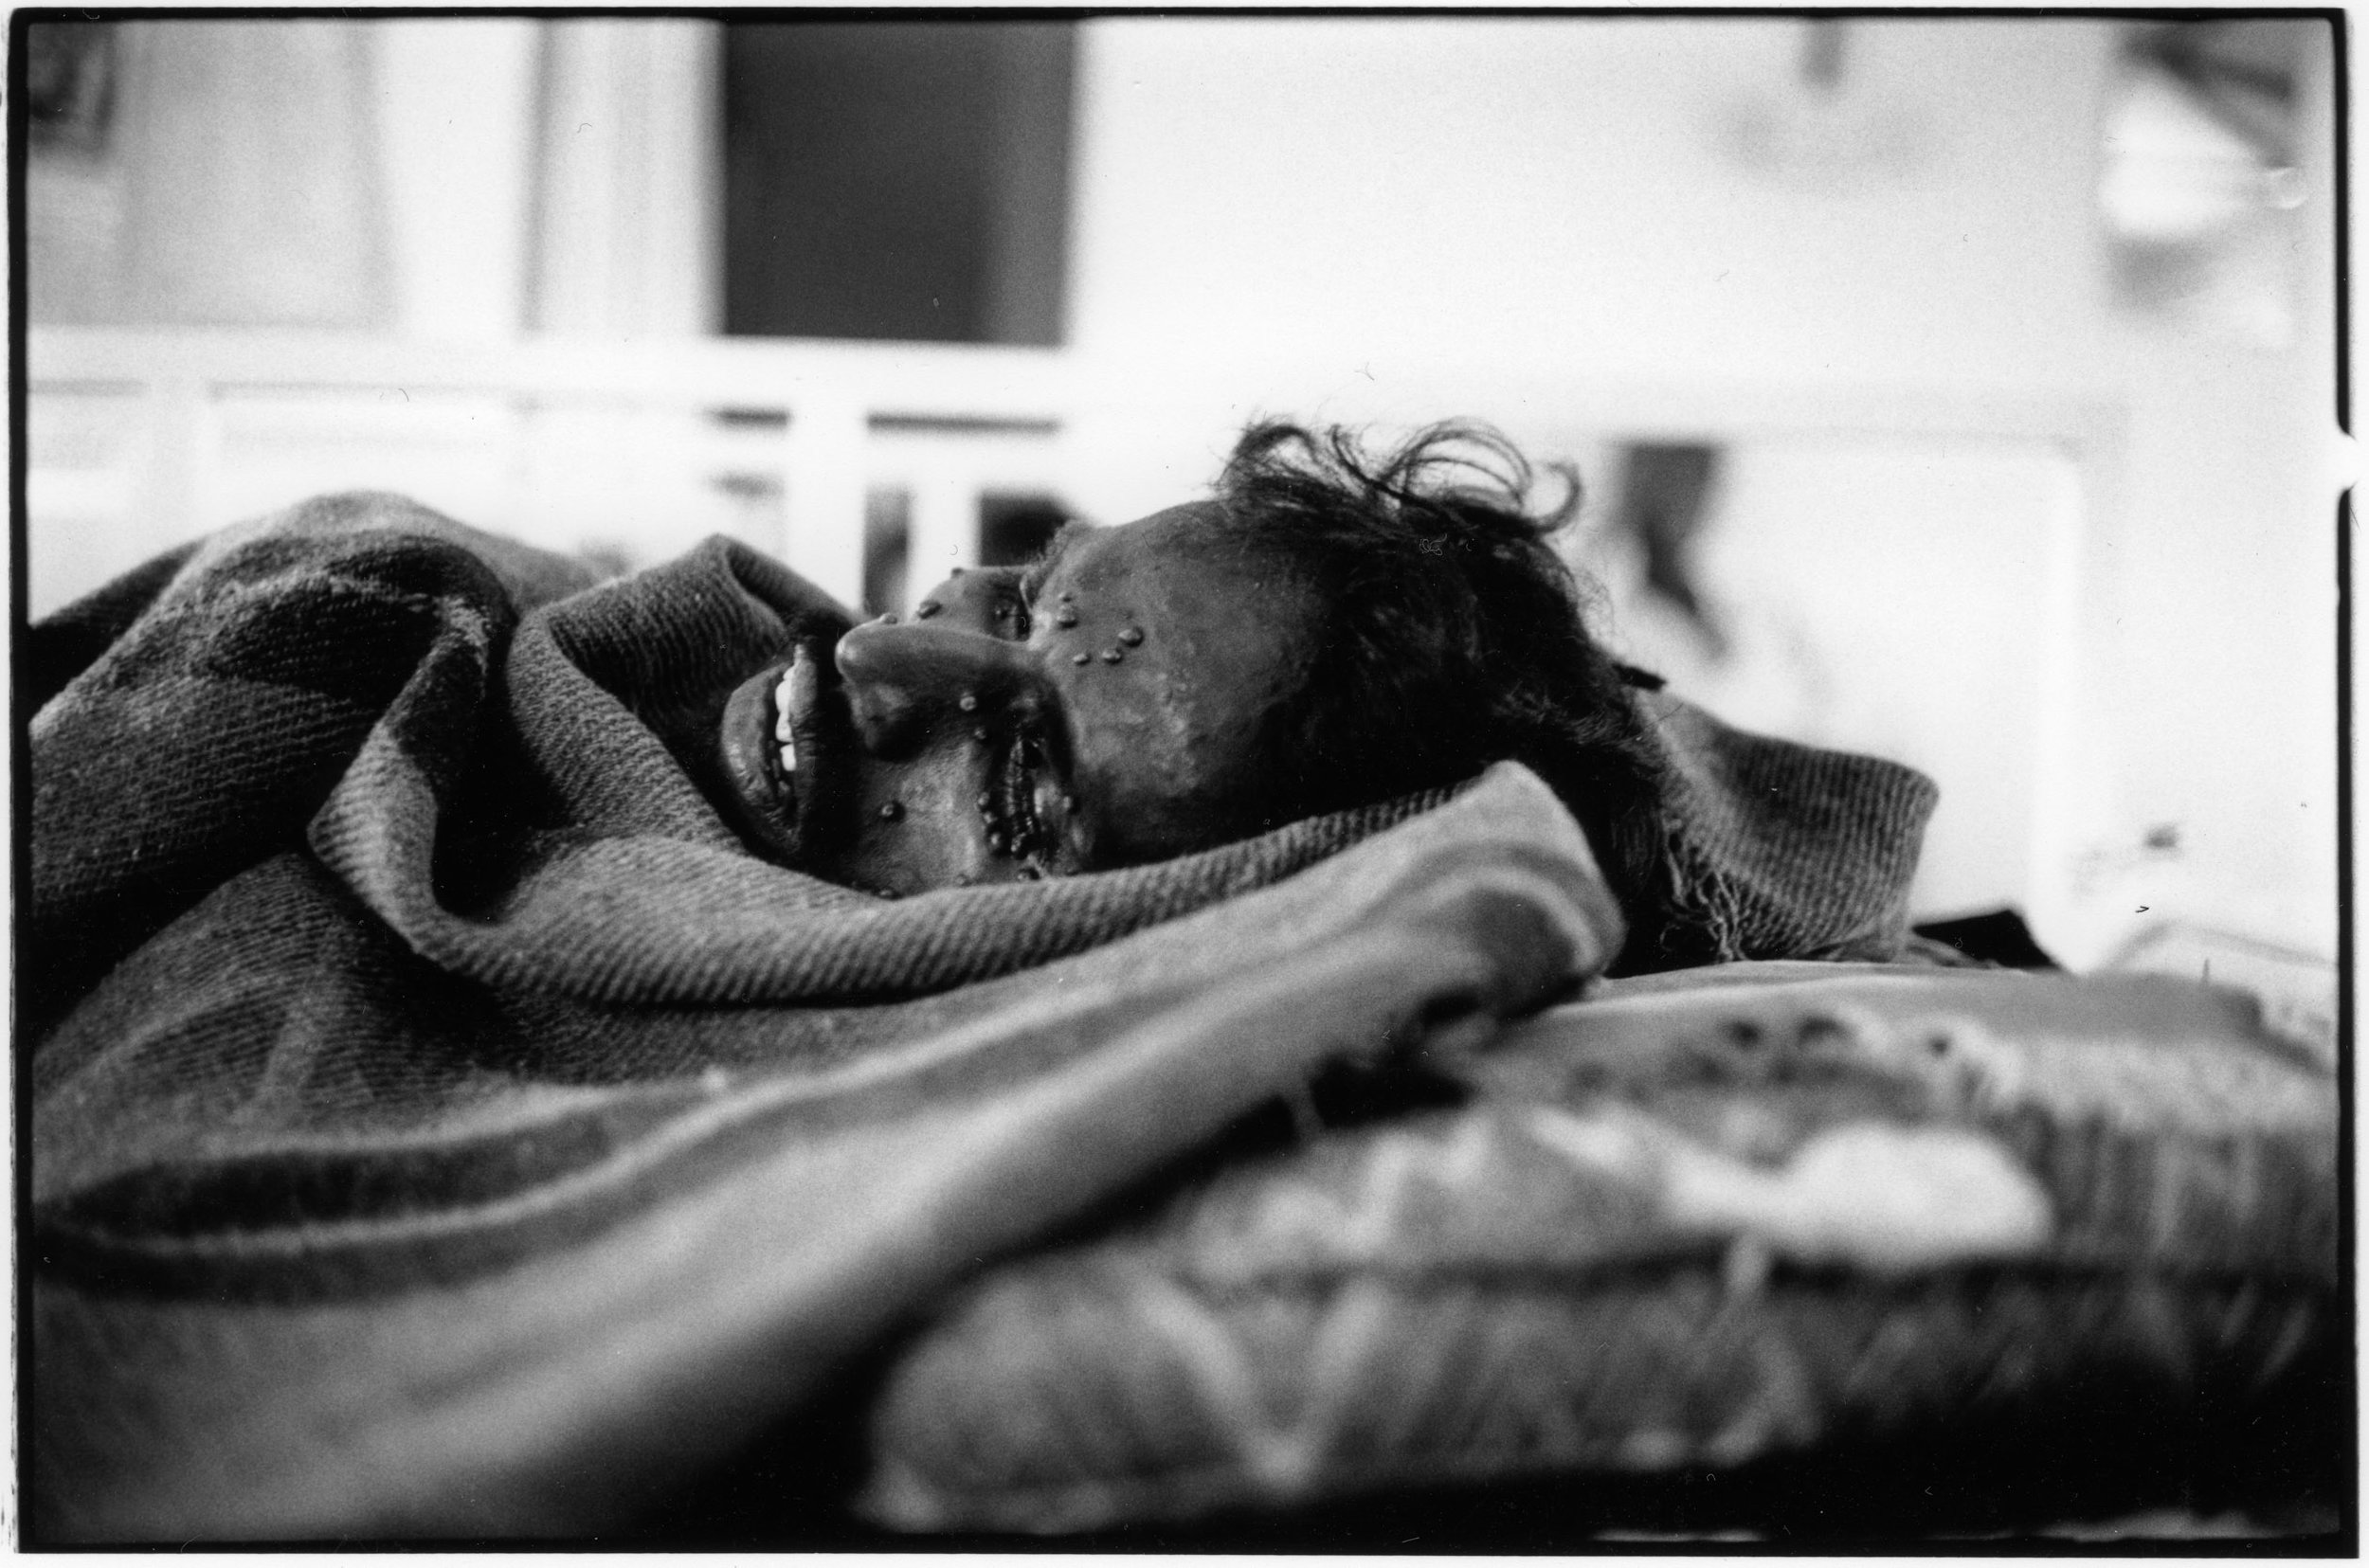 02_freelance photographer_Srinivas Kuruganti_New Delhi_HIV AIDS India.jpg